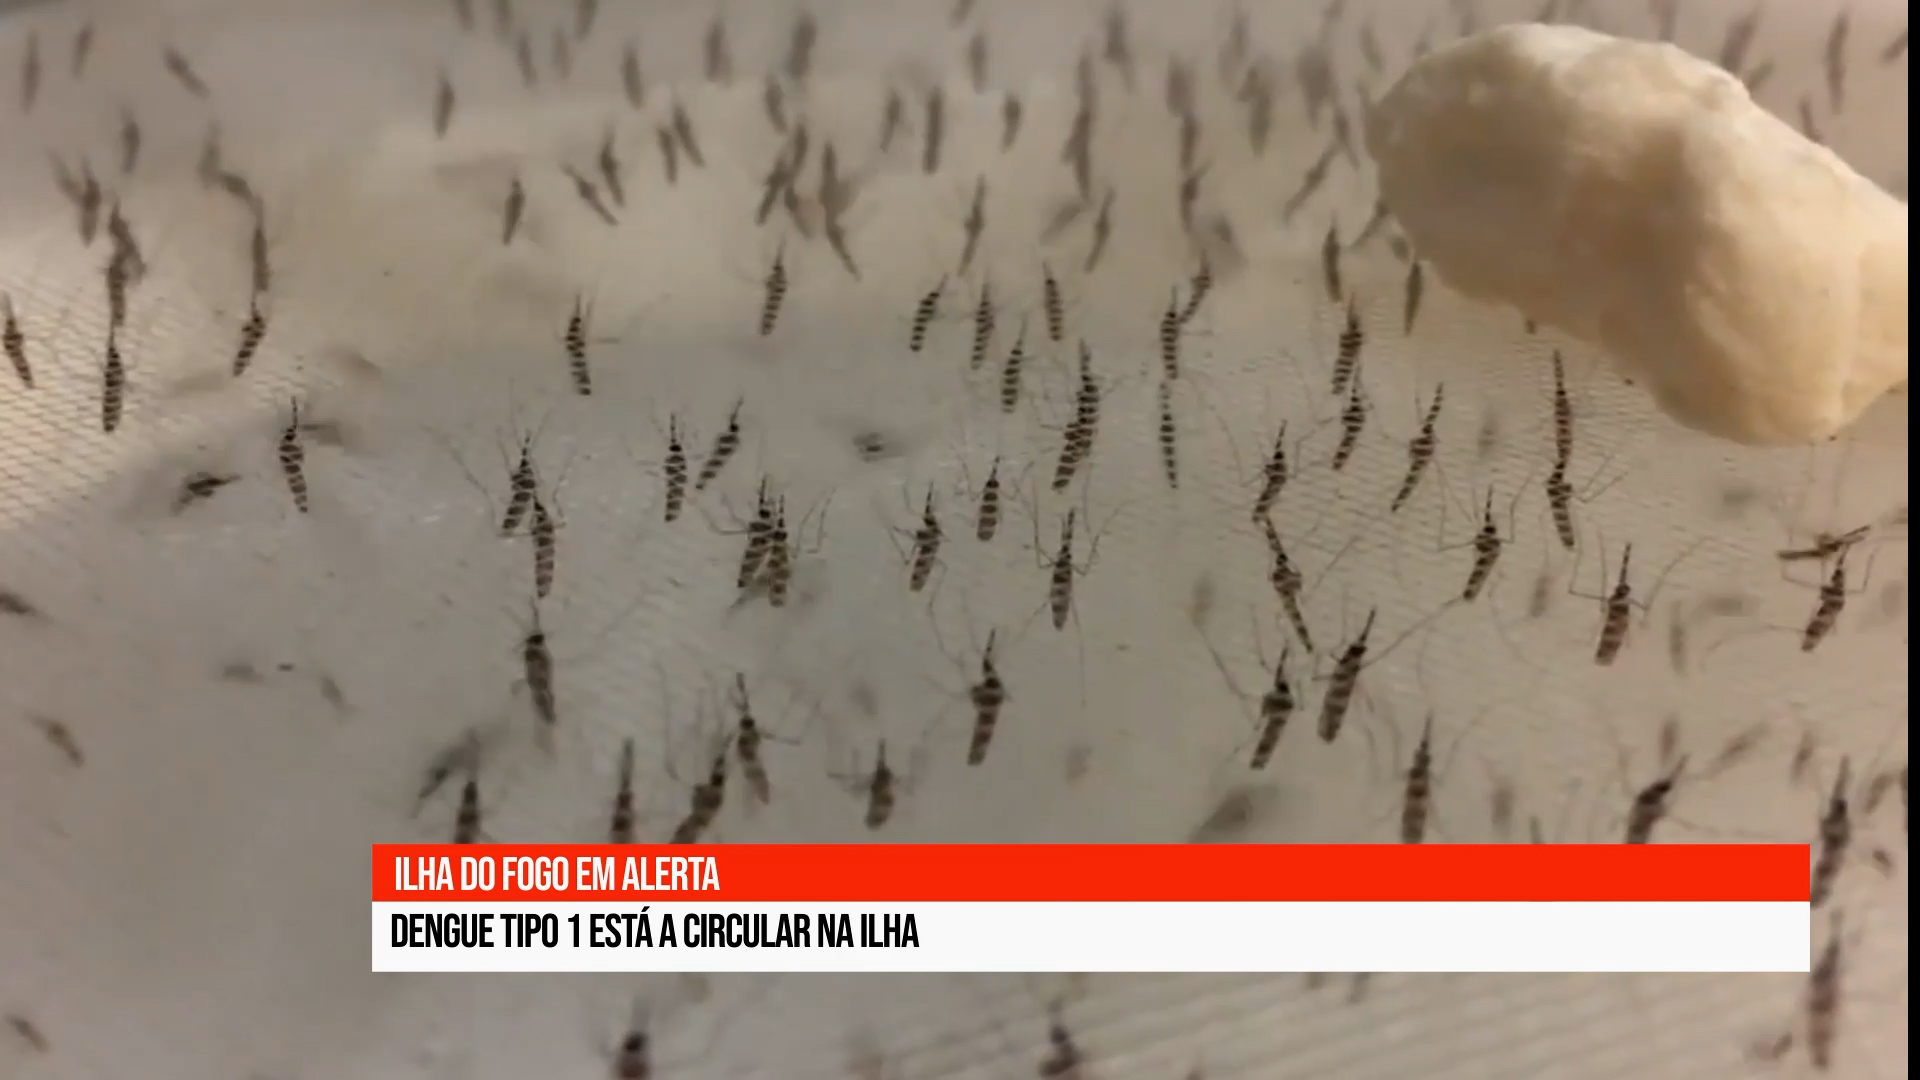 Primeiro caso de dengue tipo 1 detetado na ilha do Fogo